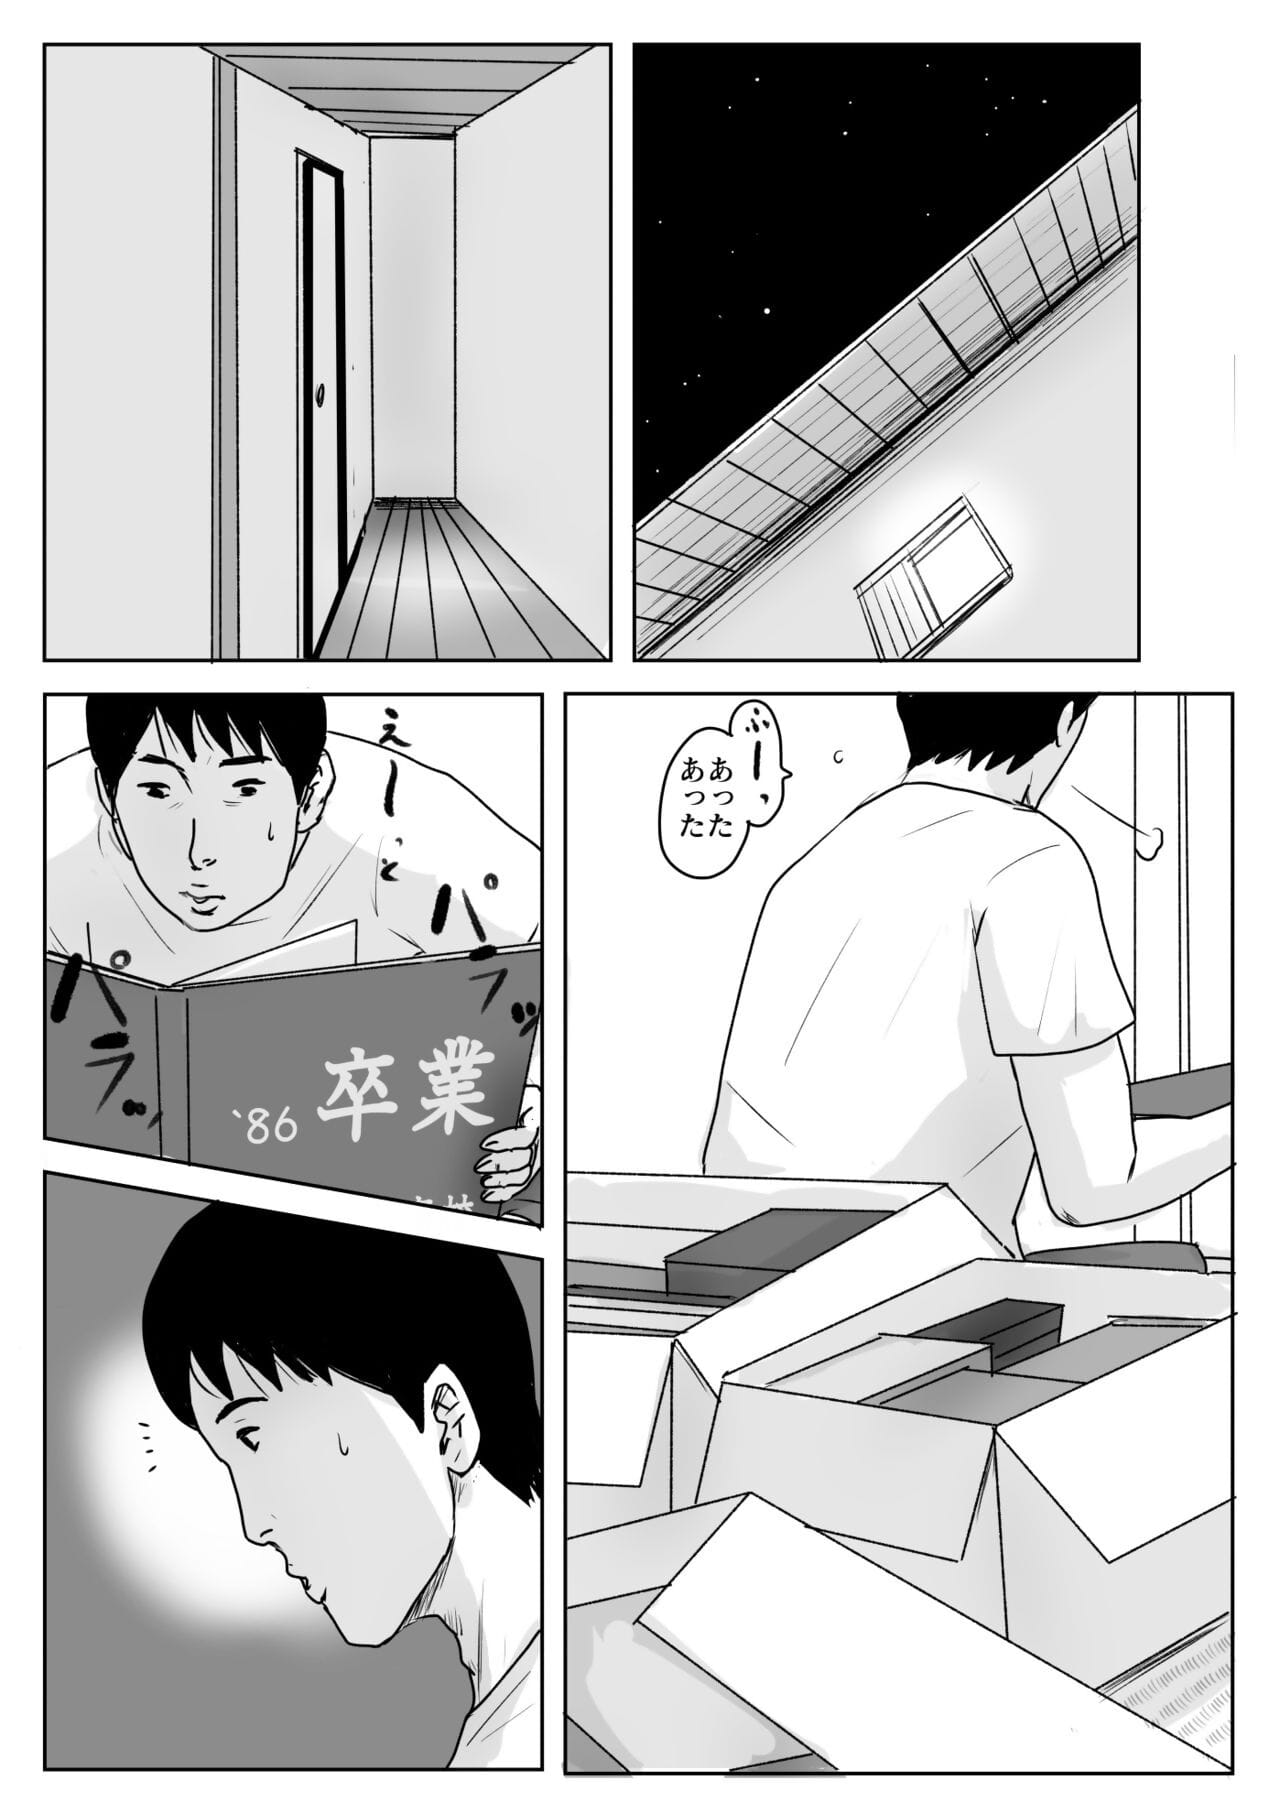 哈哈 ni koishite #3 思出 没有 夏 page 1